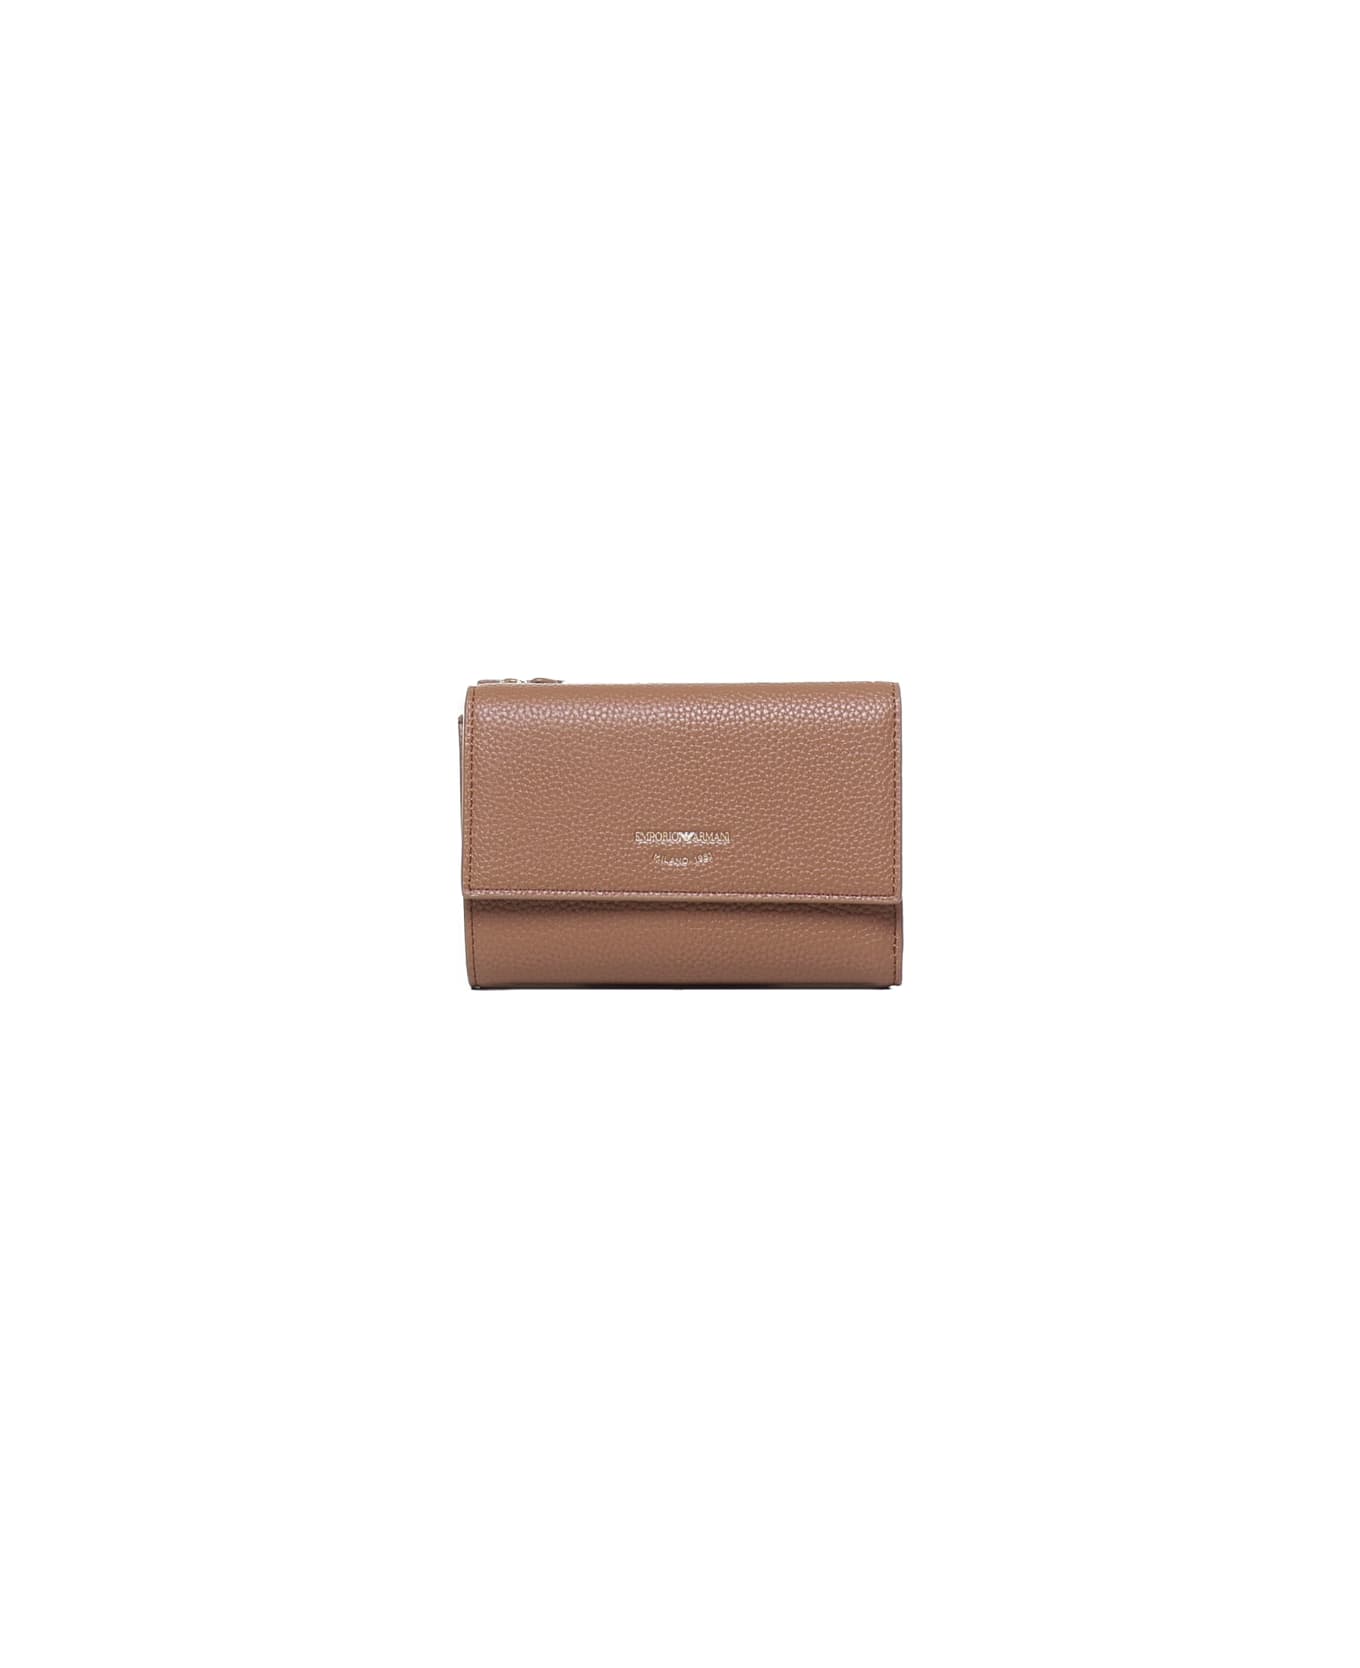 Giorgio Armani Wallet With Card Compartment And Magnetic Closure Giorgio Armani - Wood